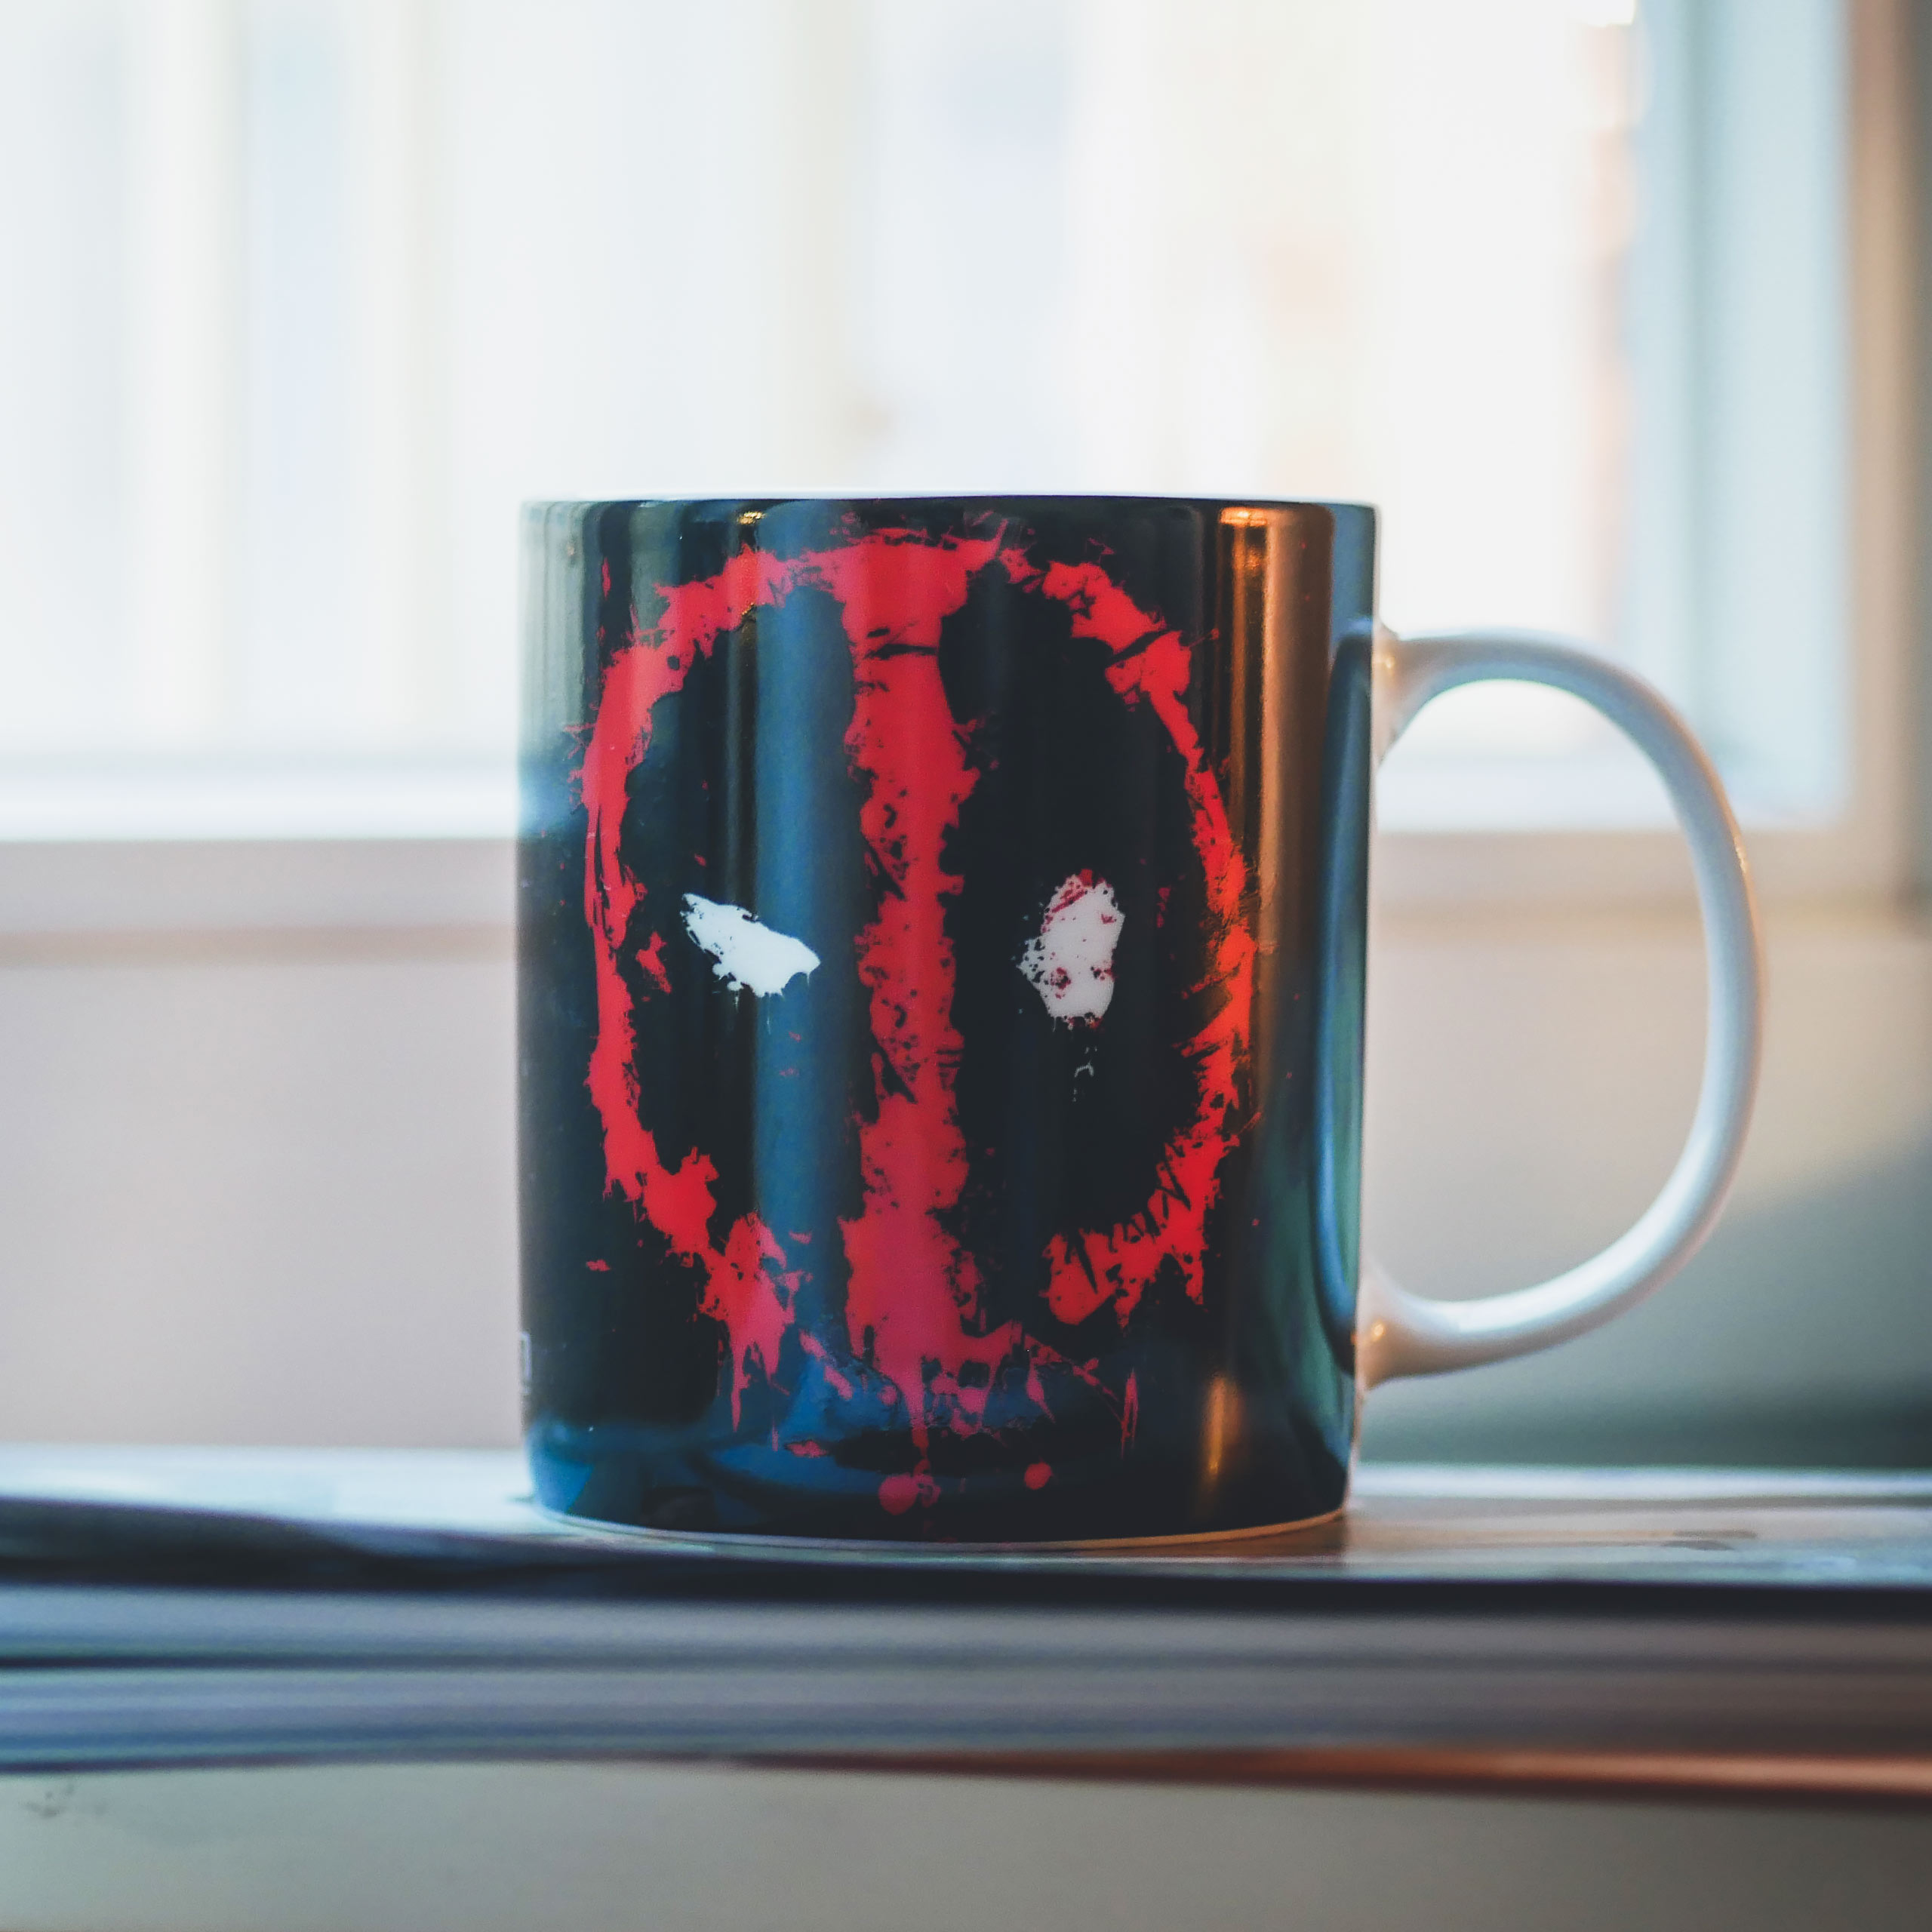 Deadpool - Splatter Logo Mug